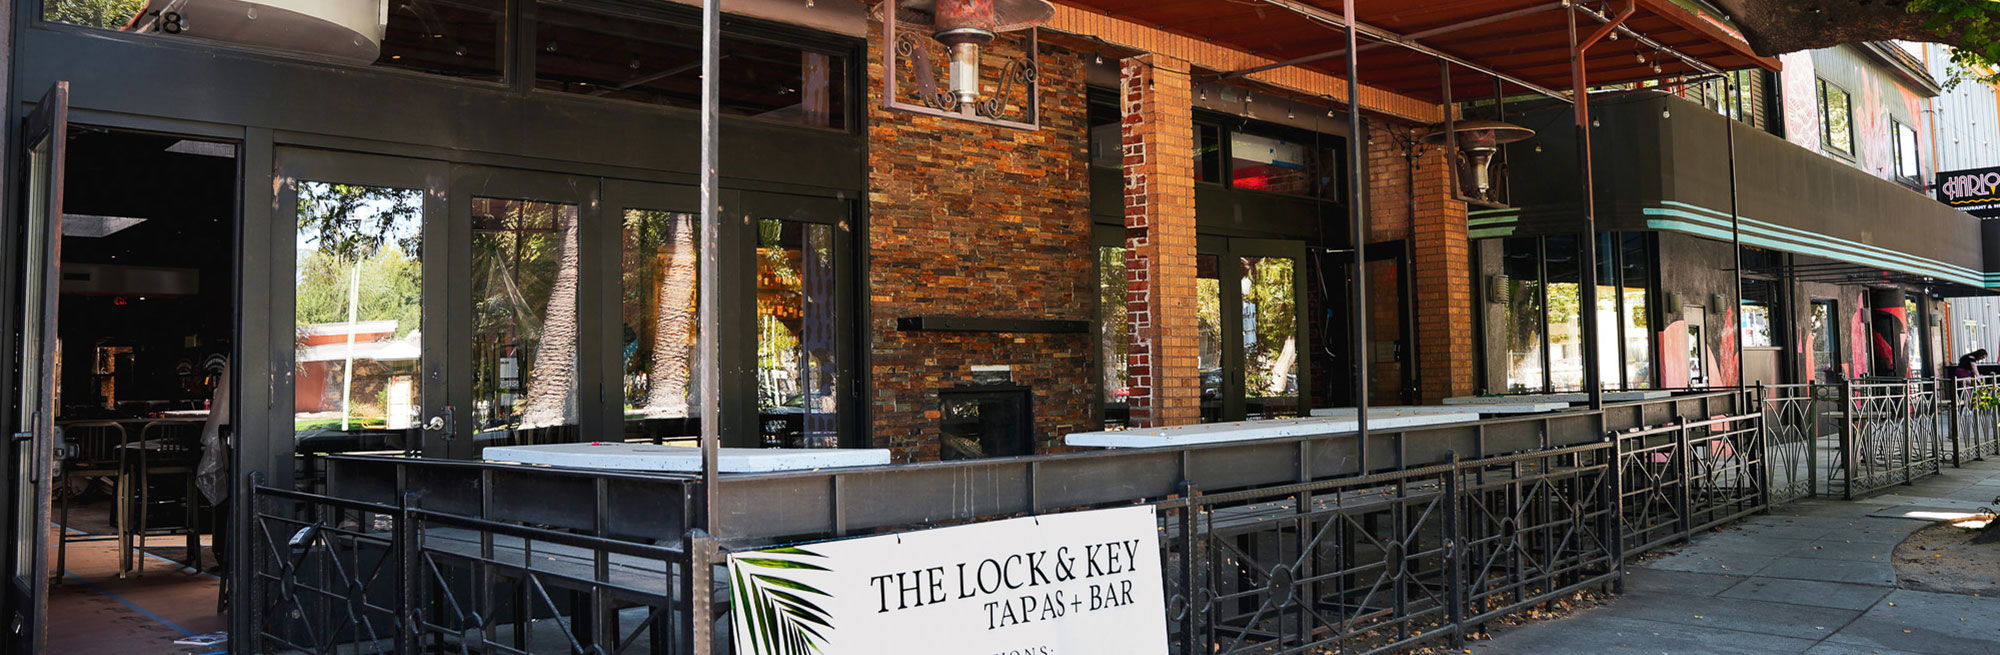 Lock 'N Key Restaurant